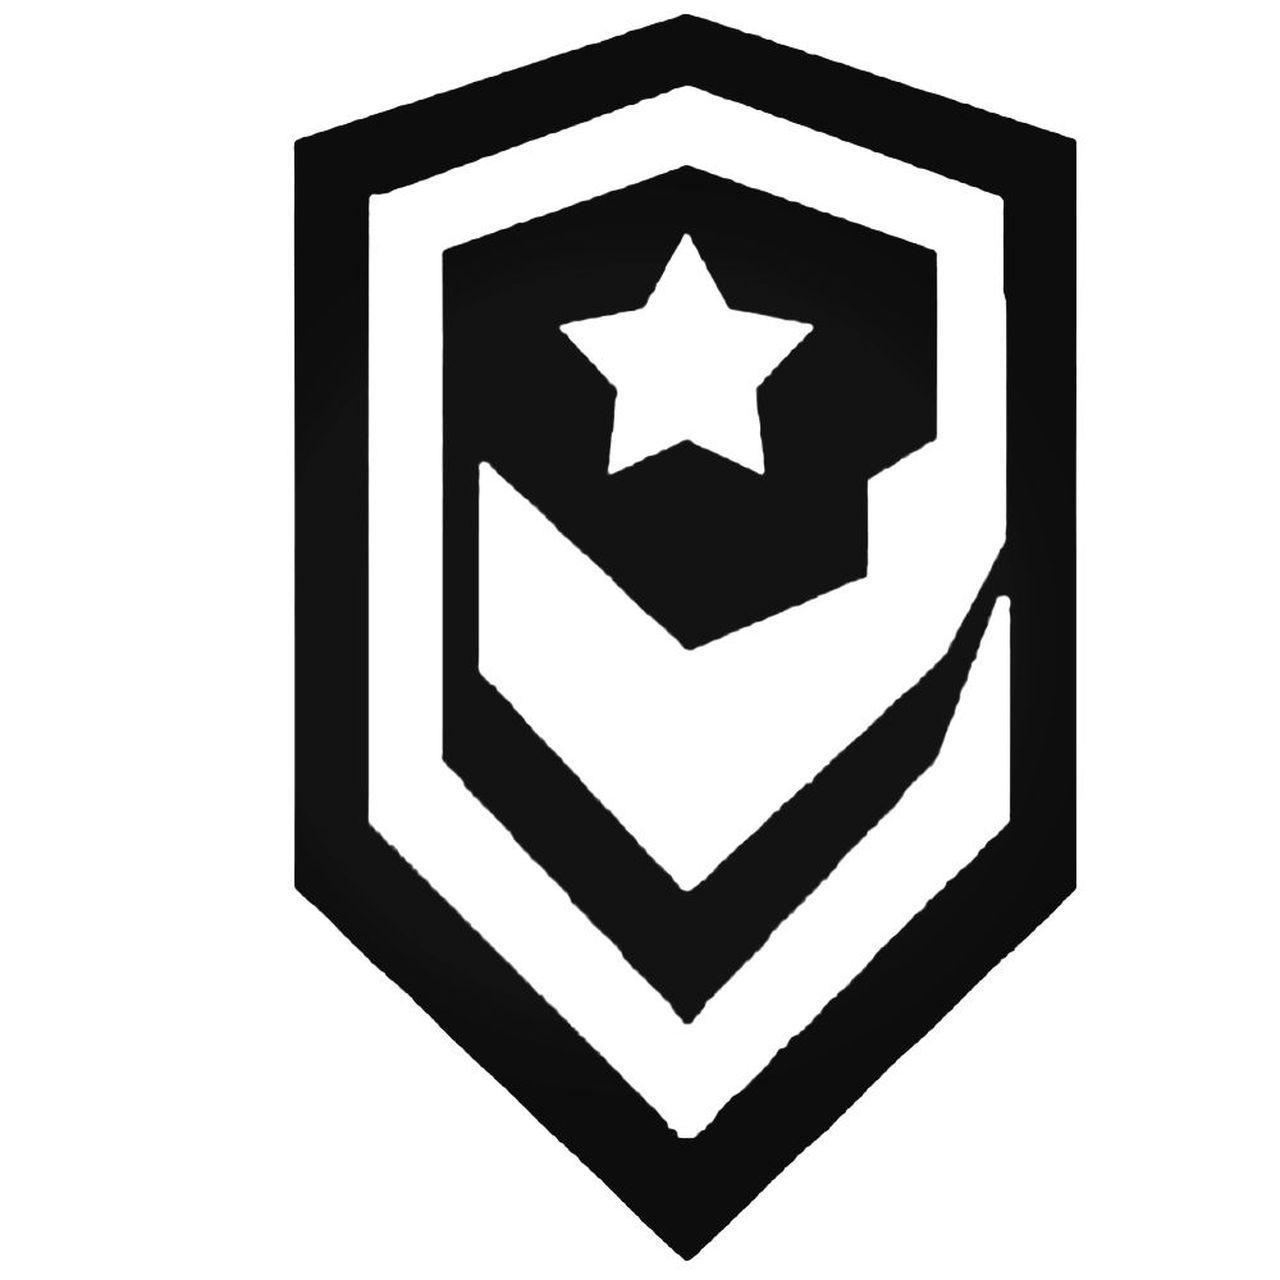 Terran Logo - Starcraft Terran Dominion Symbol Decal Sticker